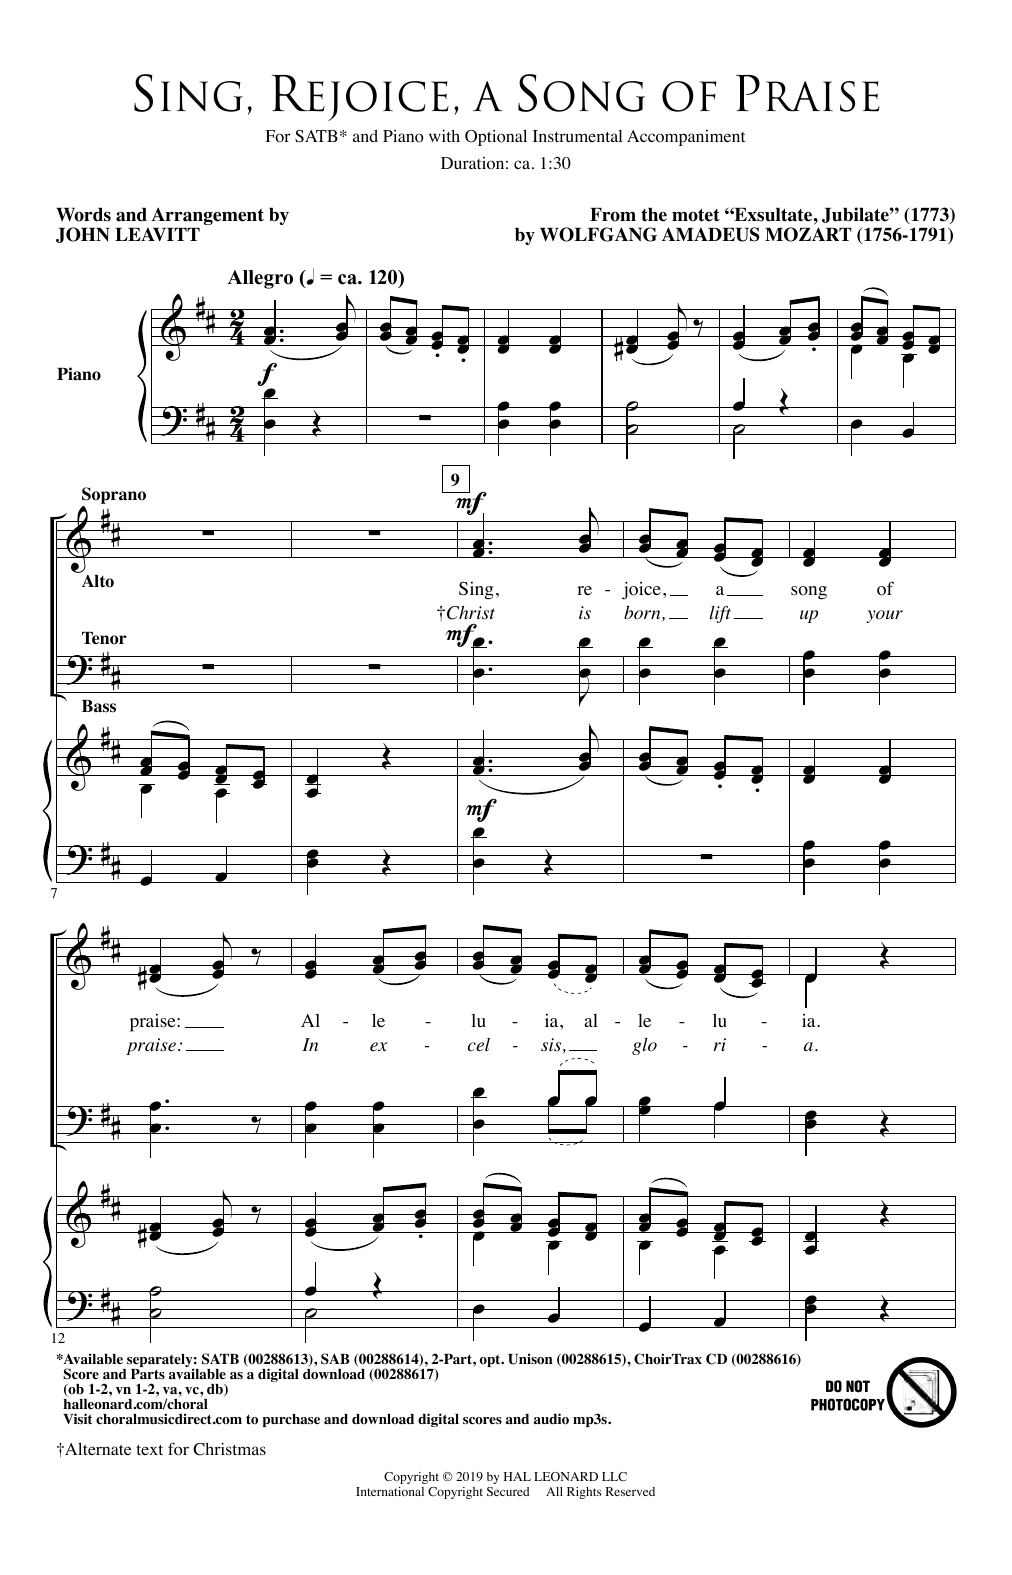 Wolfgang Amadeus Mozart Sing, Rejoice A Song Of Praise (arr. John Leavitt) Sheet Music Notes & Chords for SAB Choir - Download or Print PDF